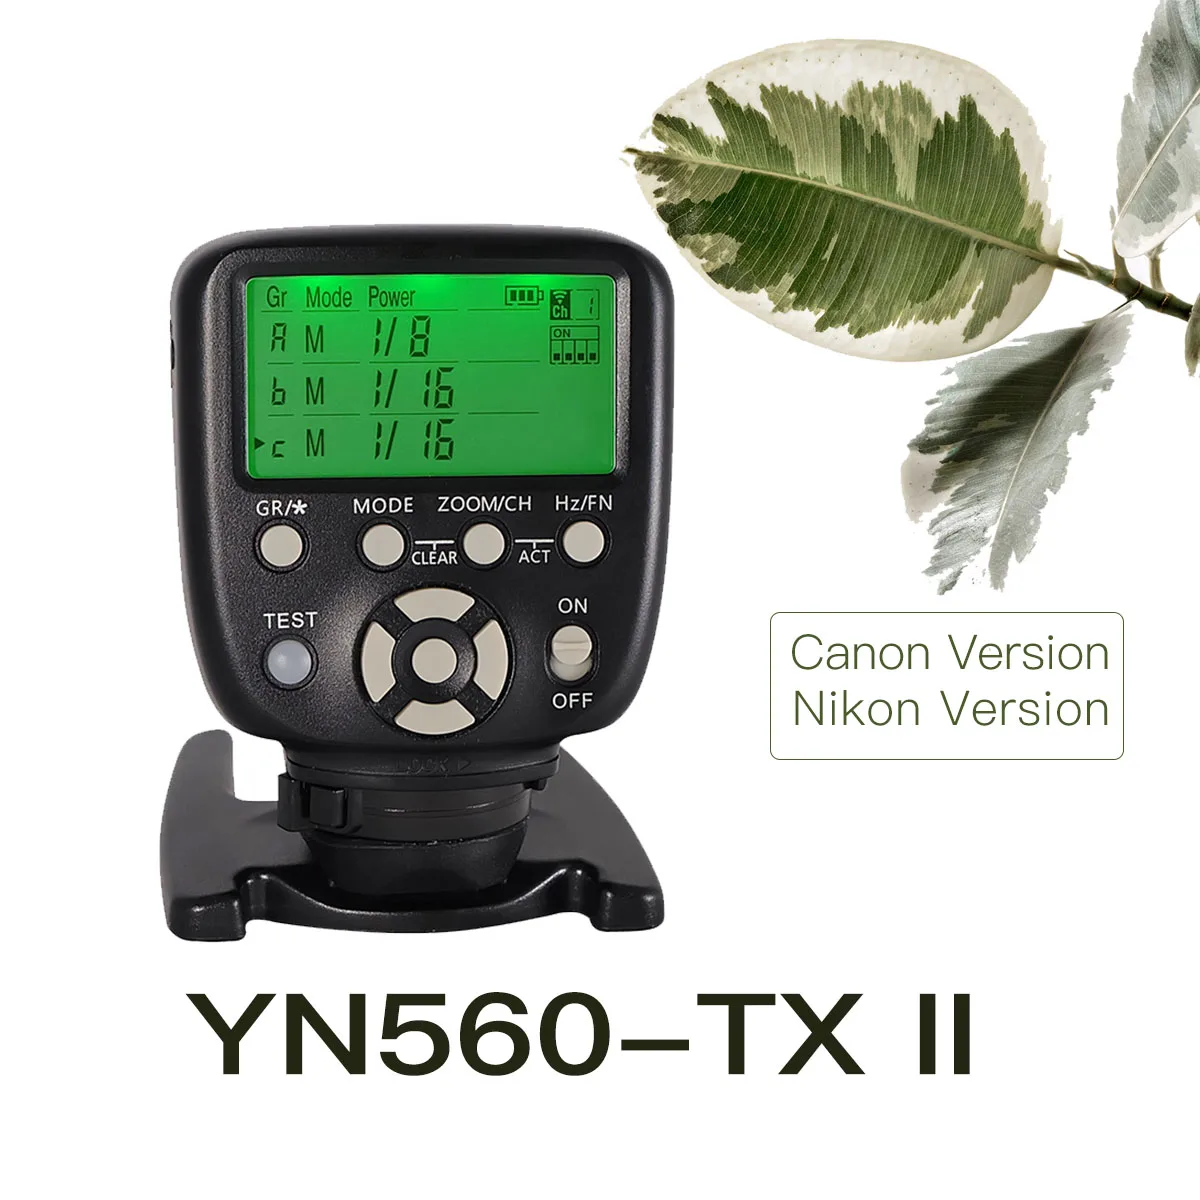 

YONGNUO YN560-TX II Wireless Flash Trigger Controller Trasmitter for YN-560III YN560IV RF-602 RF-603 II for Canon Nikon